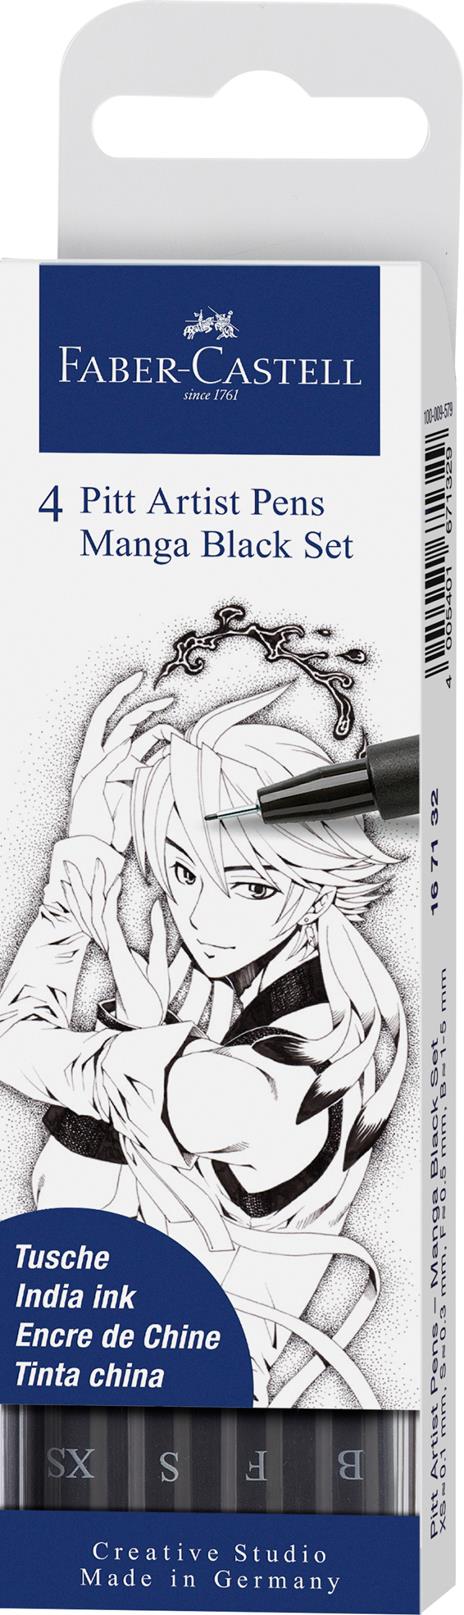 Bustina da 4 Pitt Artist Pen-Manga Nero nei tratti XS-S-F-B